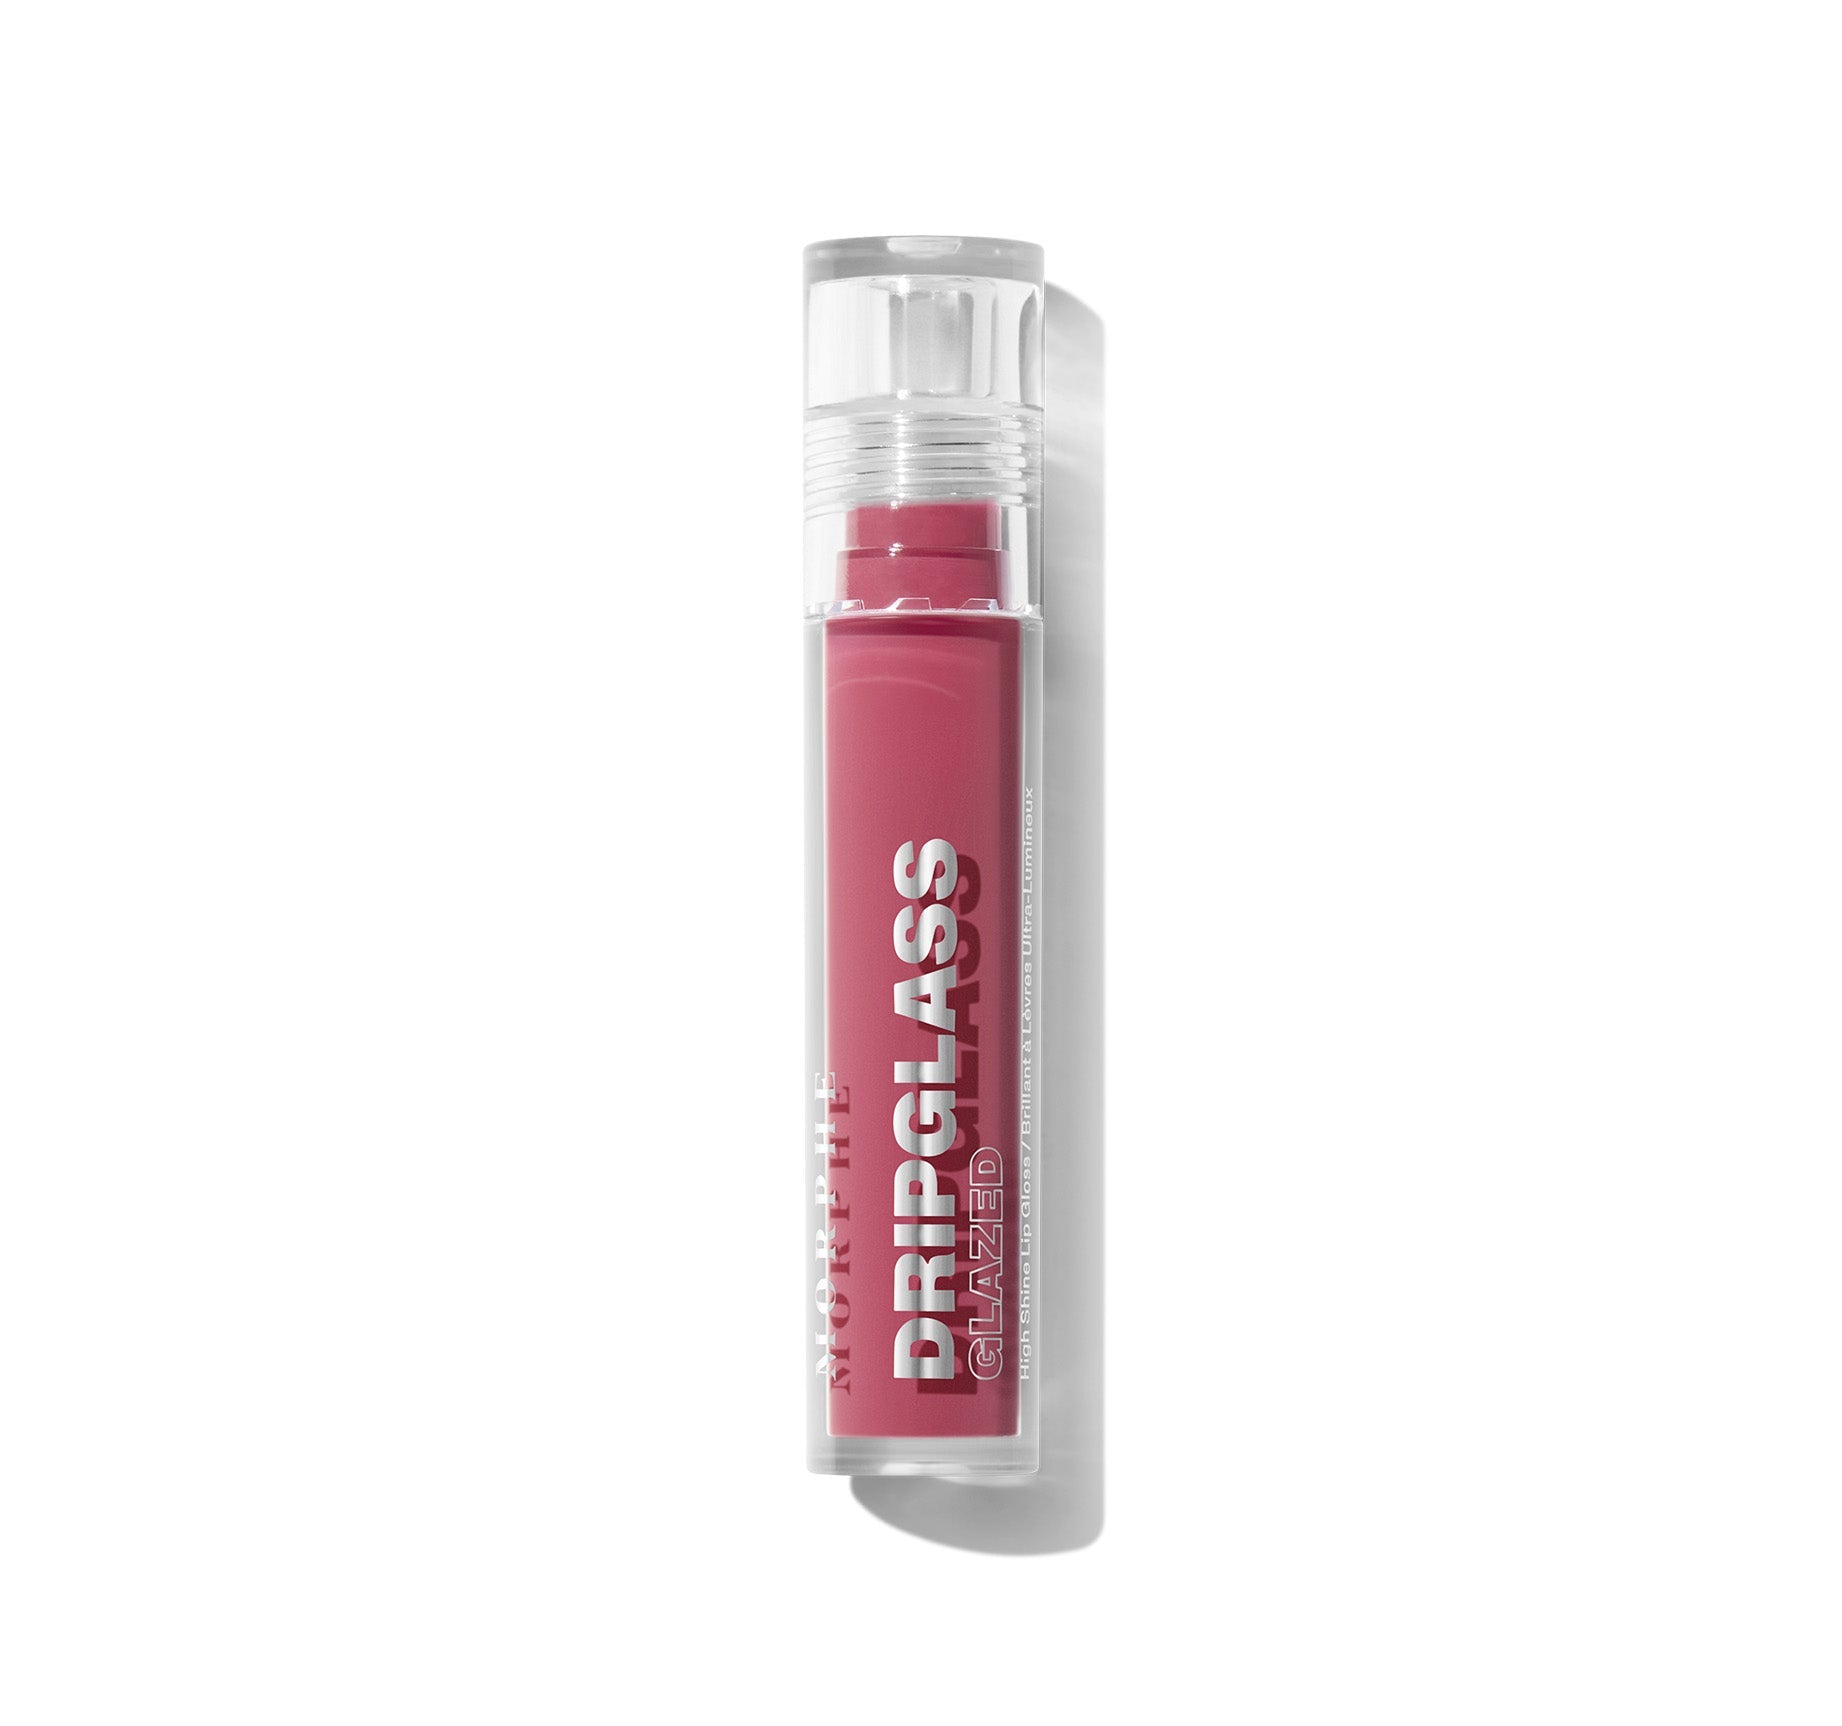 Dripglass Glazed High Shine Lip Gloss - Shatterproof Mauve - Image 10